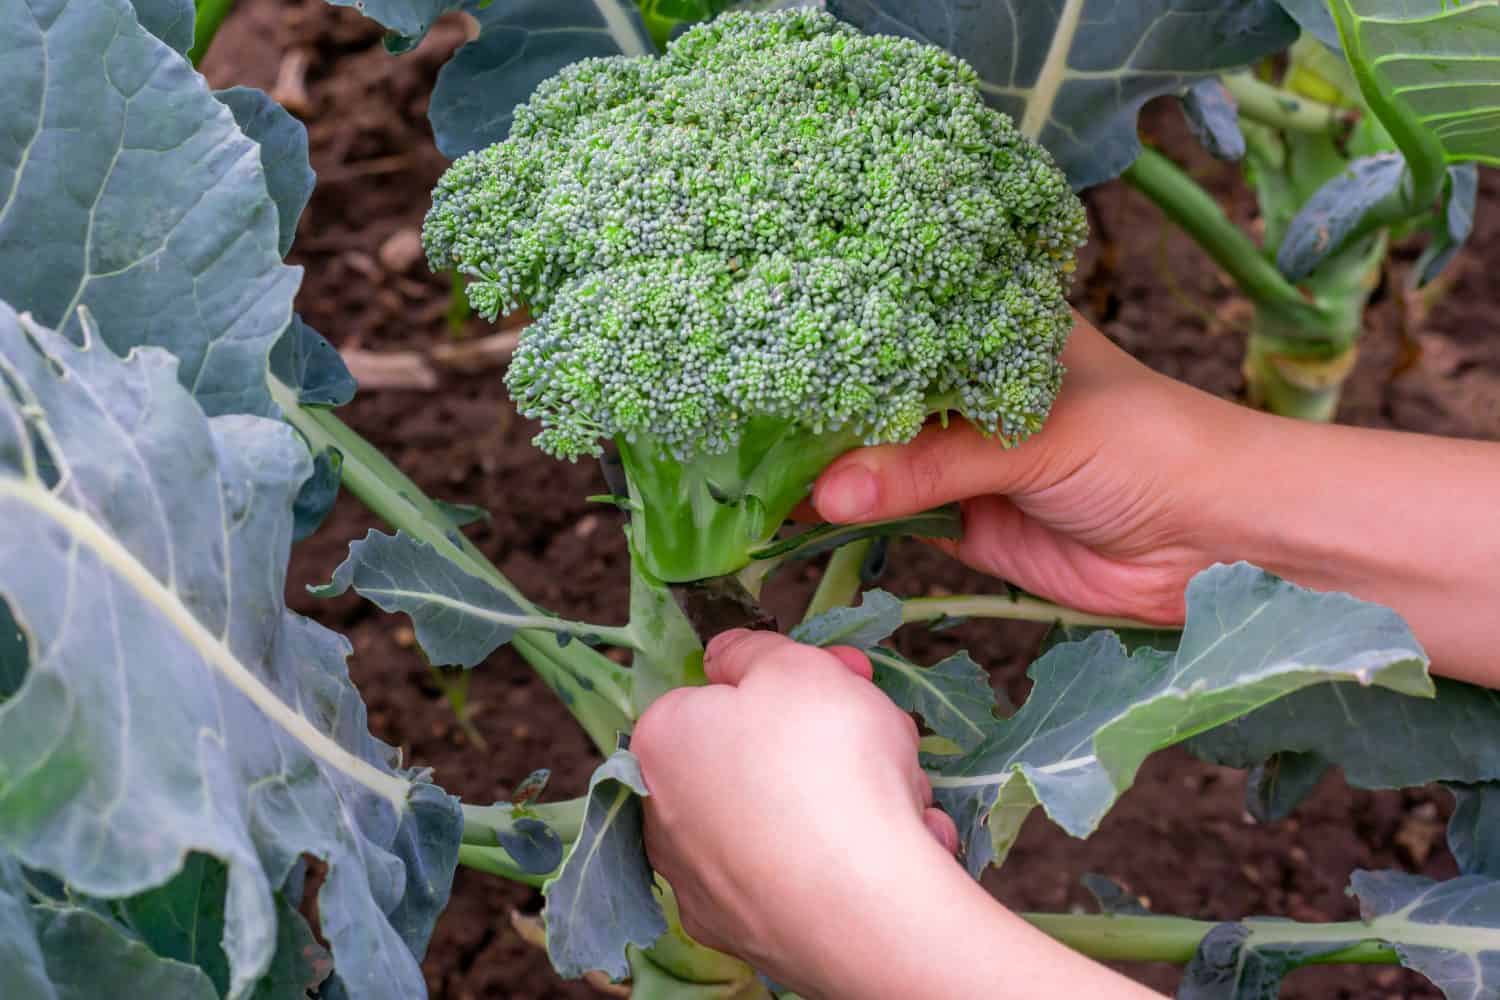 Female farmer's hands cut large green broccoli cauliflower on garden bed. Countryside season organic vegetables.